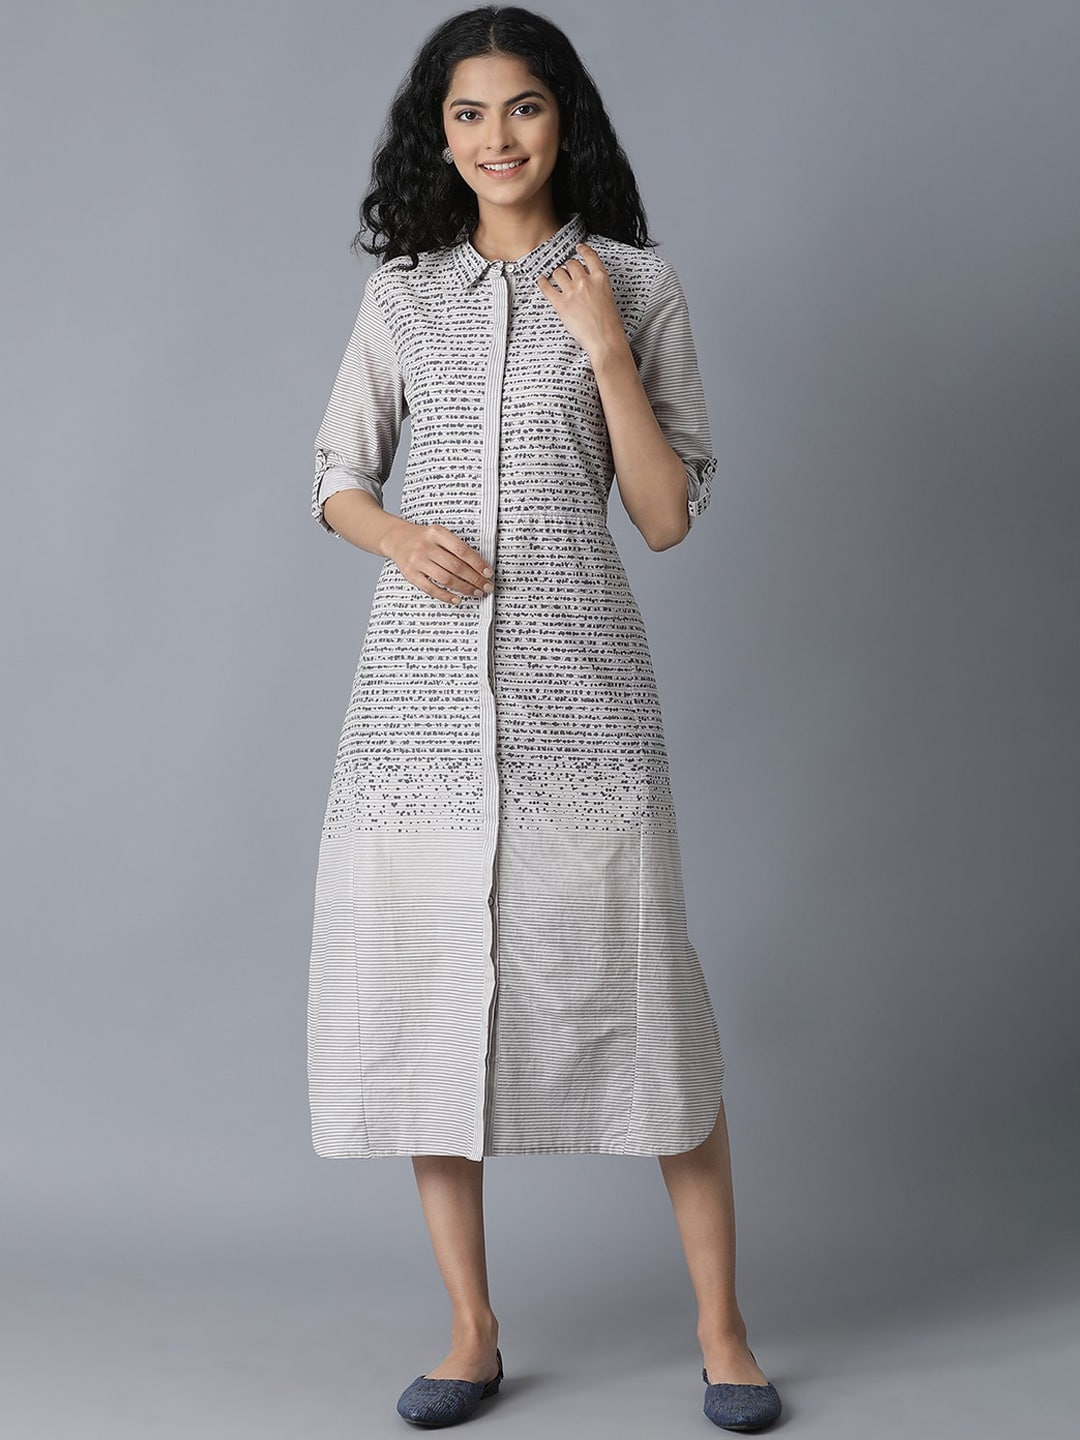 W Women Grey & Black Printed Shirt Dress Price in India